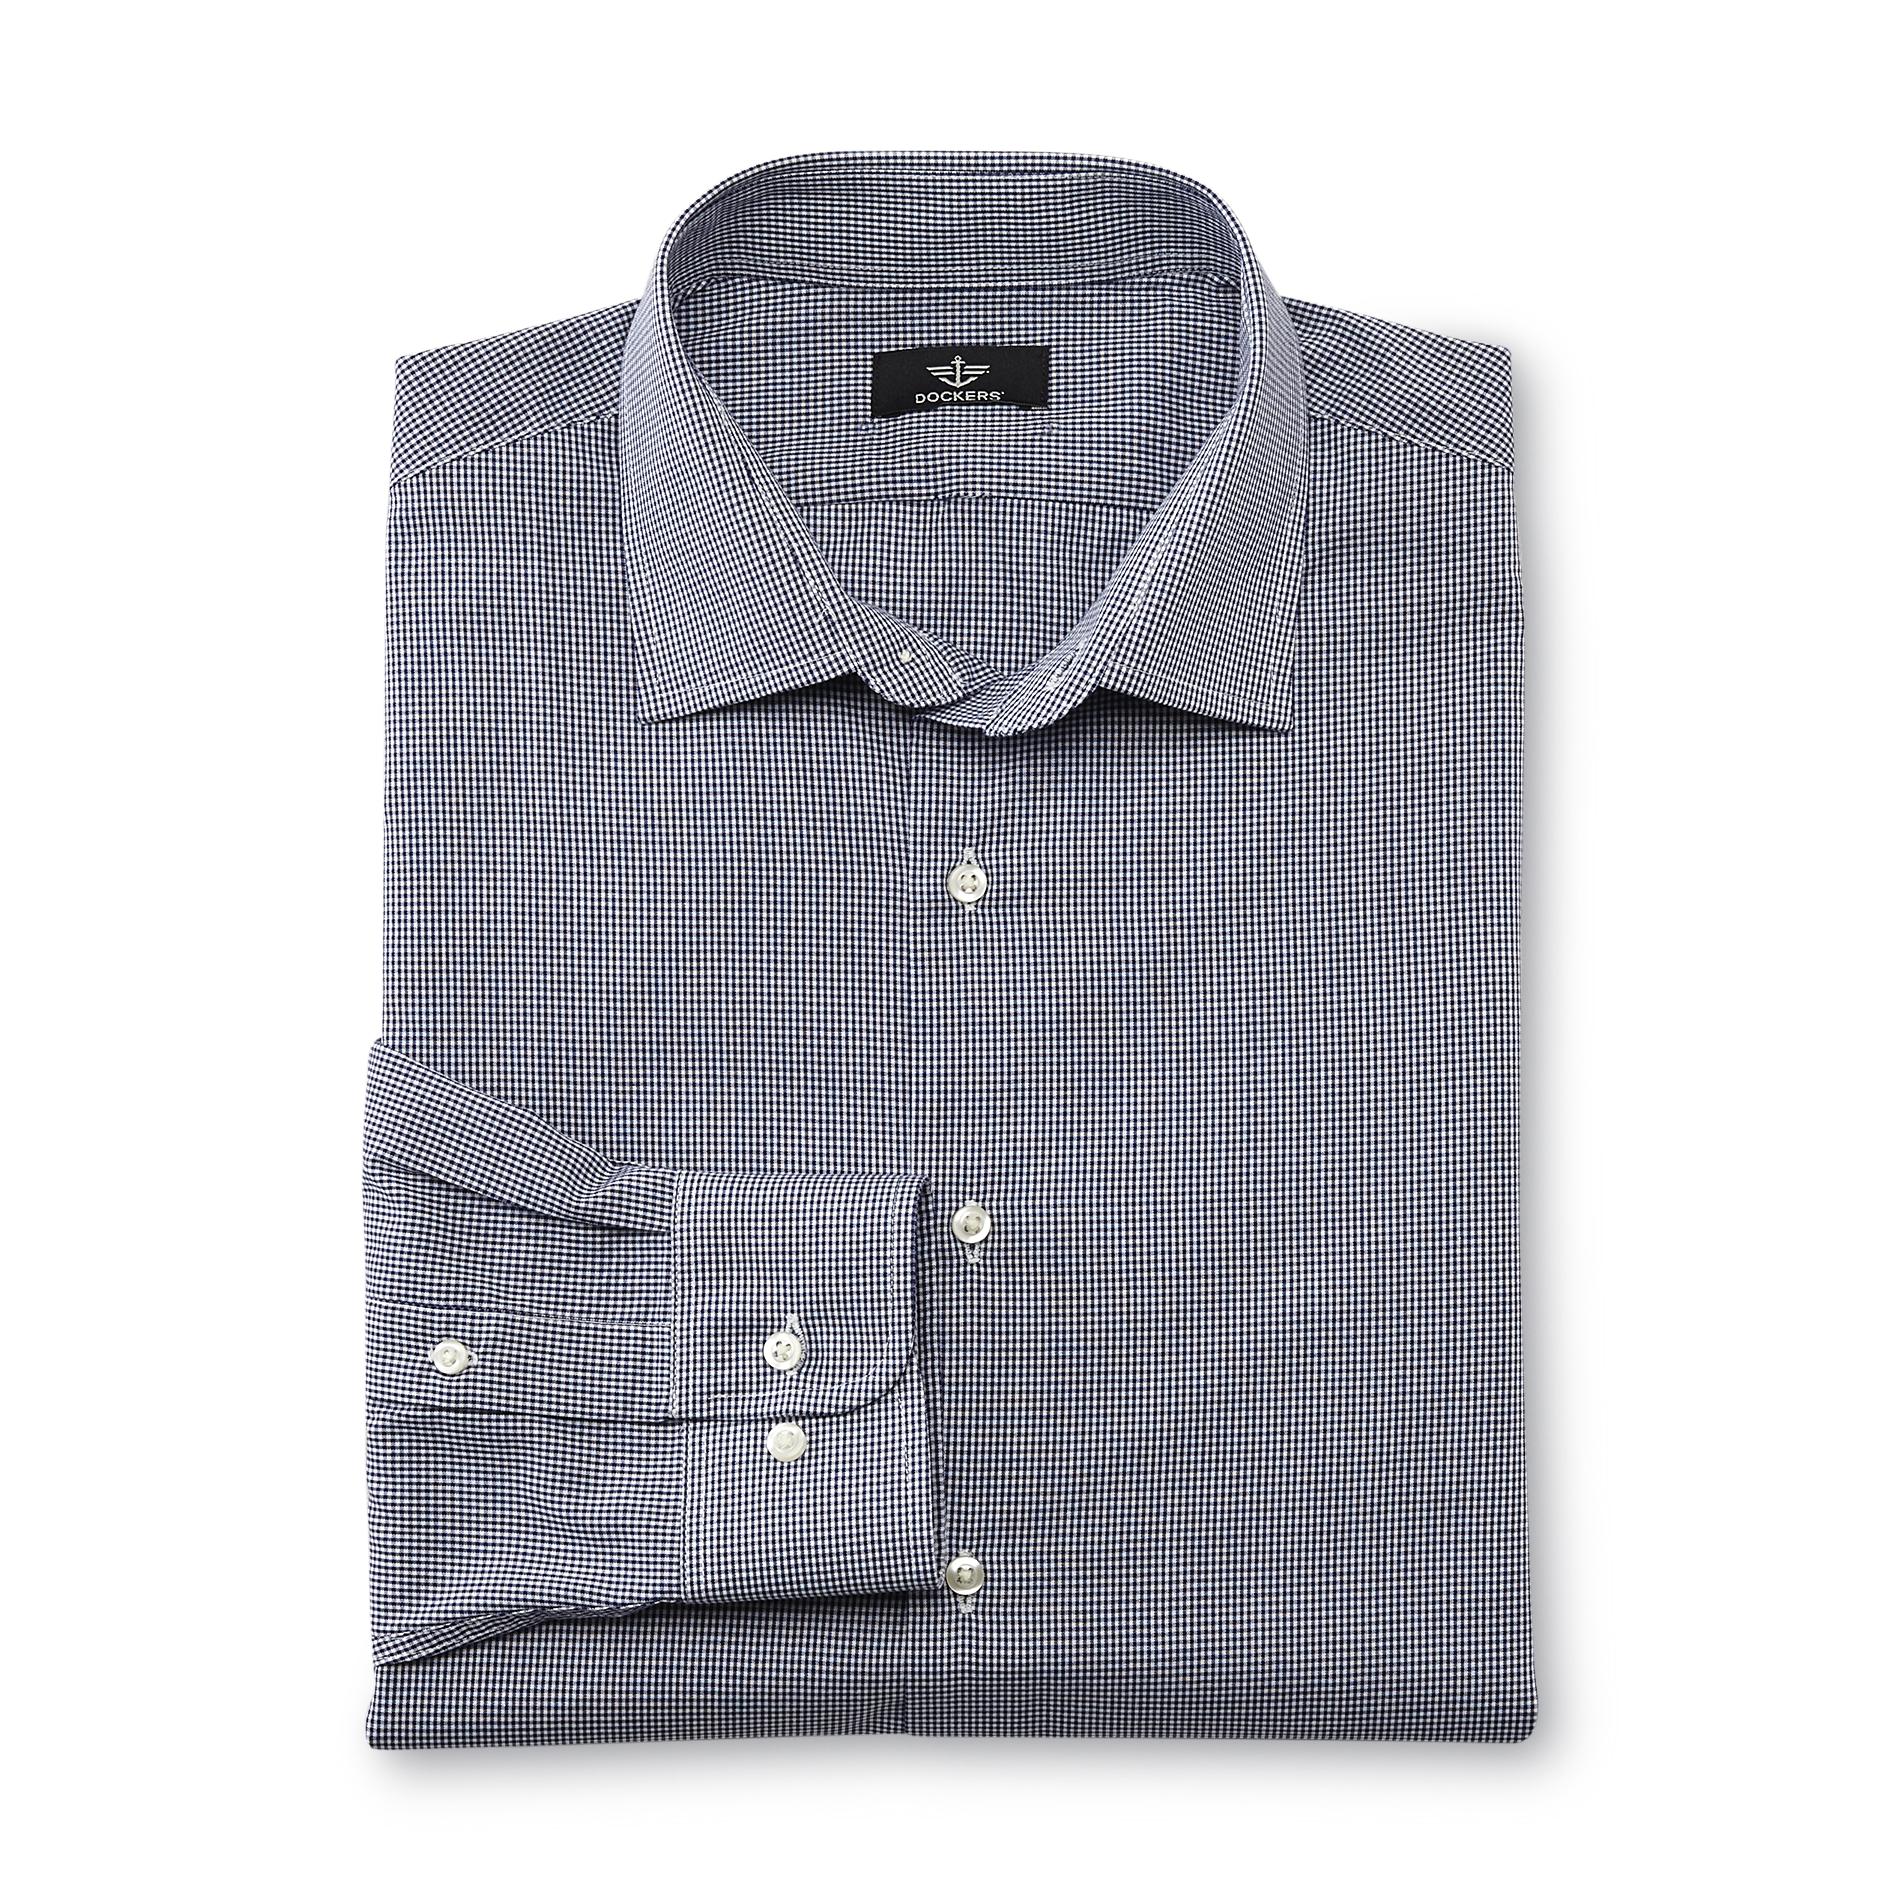 Dockers Men's Button-Front Dress Shirt - Check Print